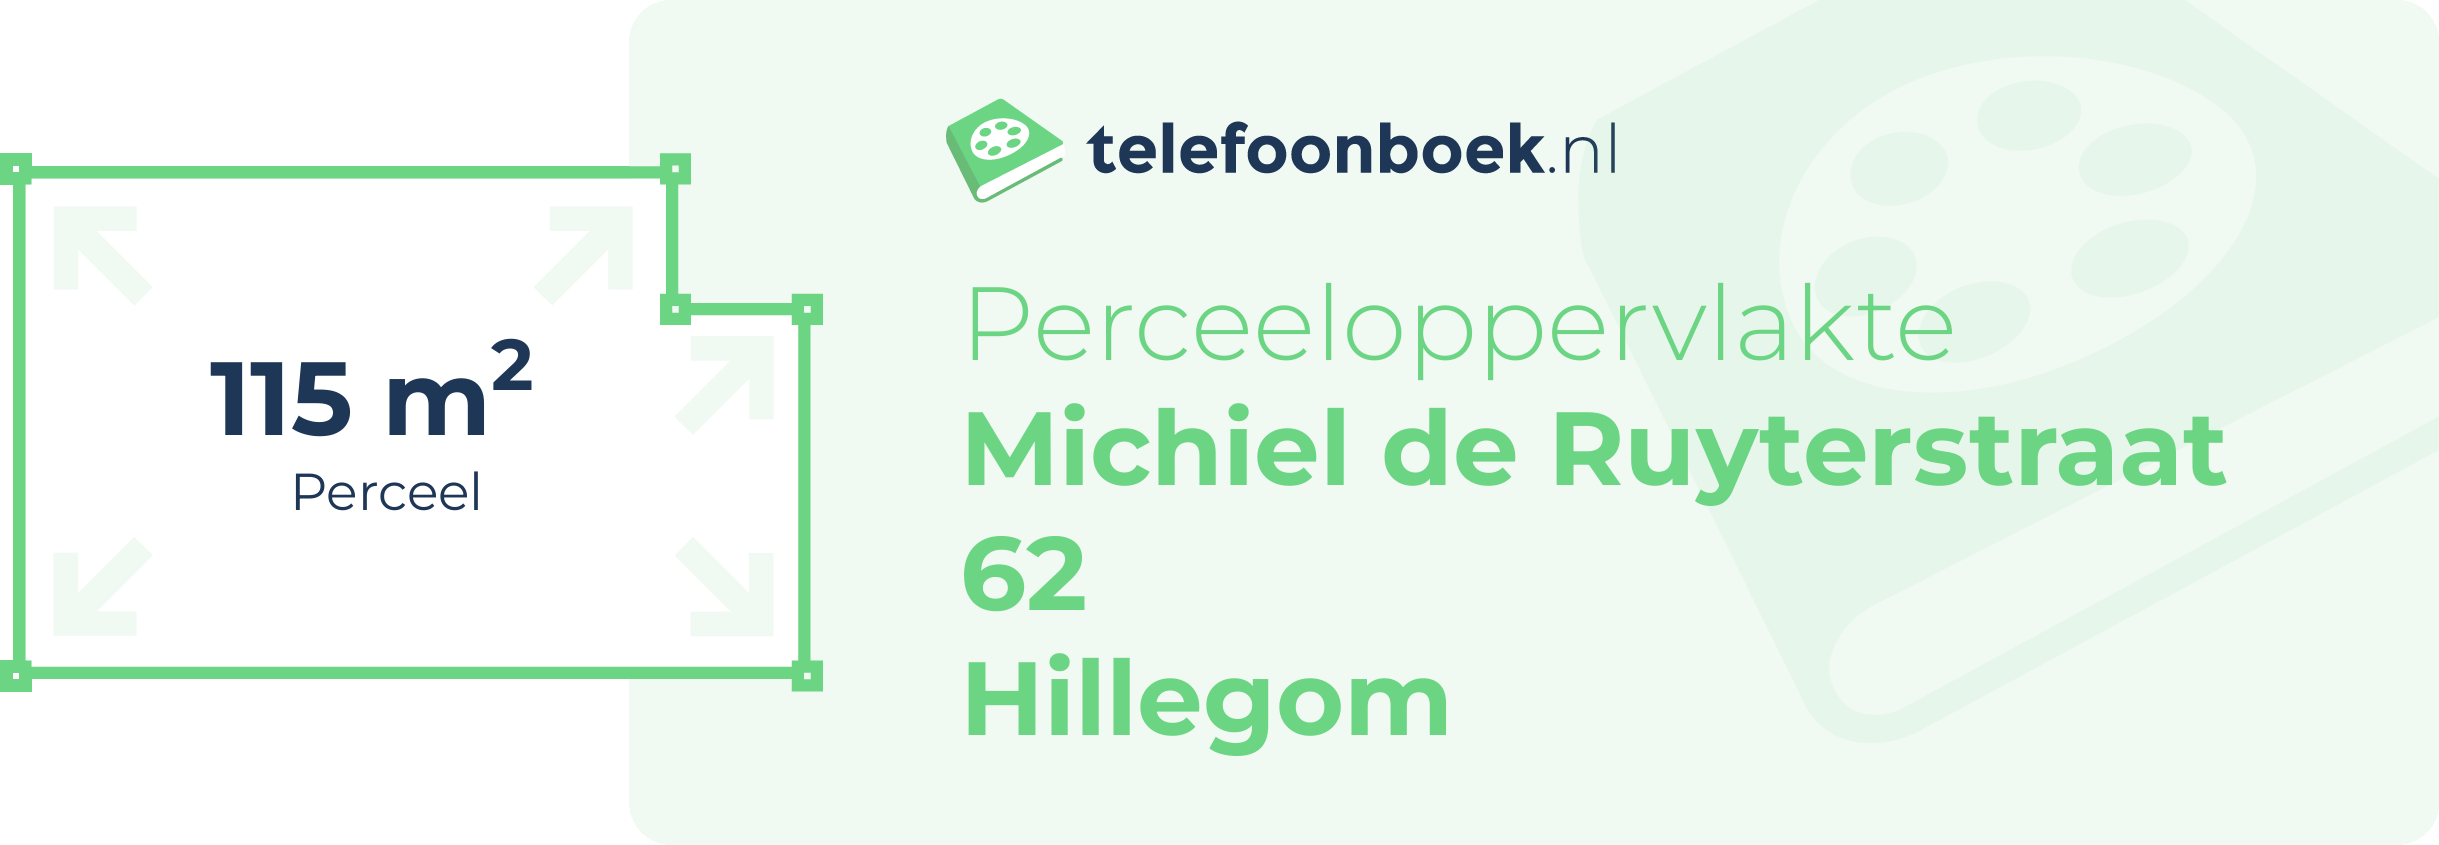 Perceeloppervlakte Michiel De Ruyterstraat 62 Hillegom